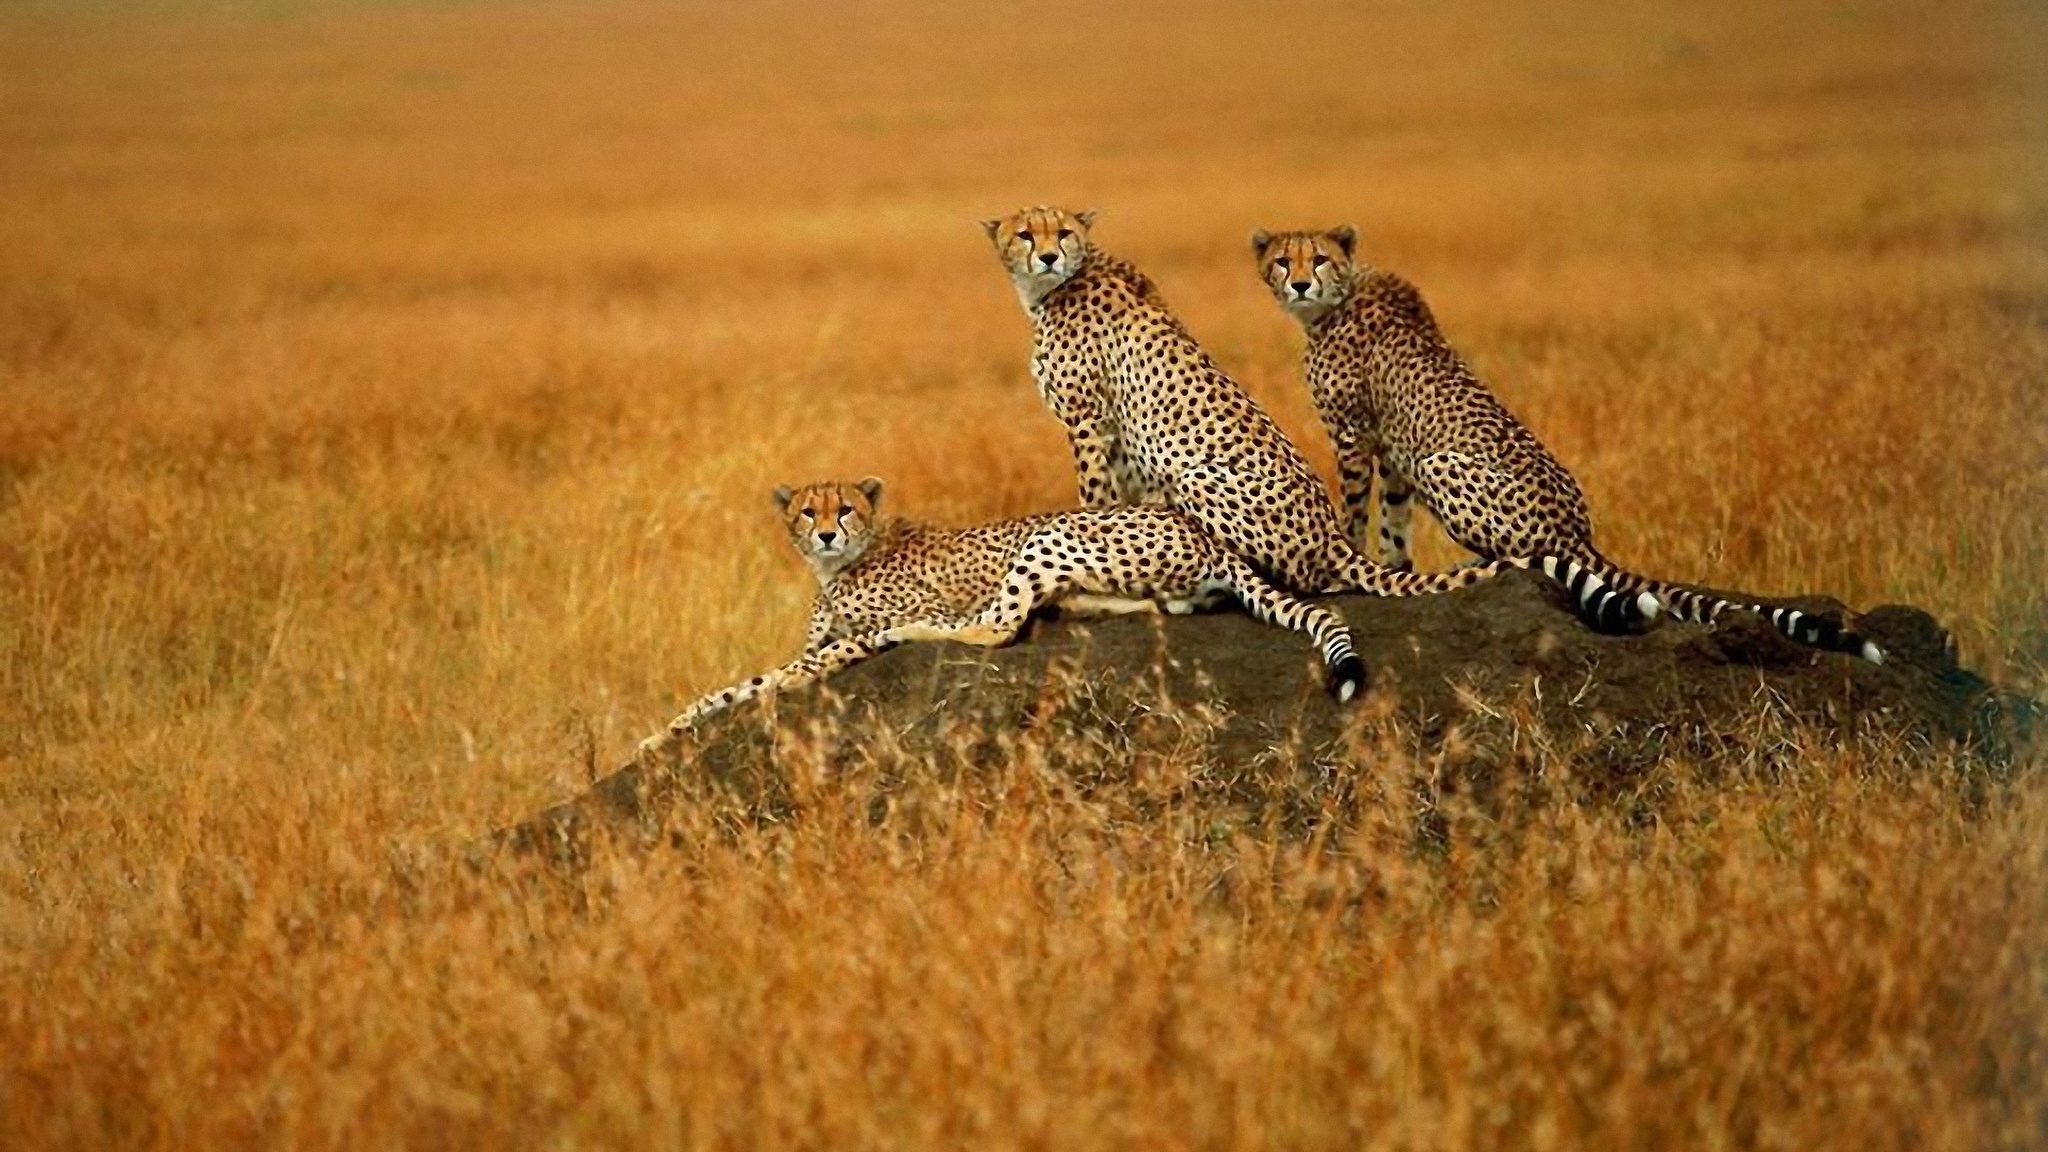 Wild life 4. Африканская Саванна гепард. Леопард гепард в дикой природе. Гепард в Африке. Леопард в саванне.